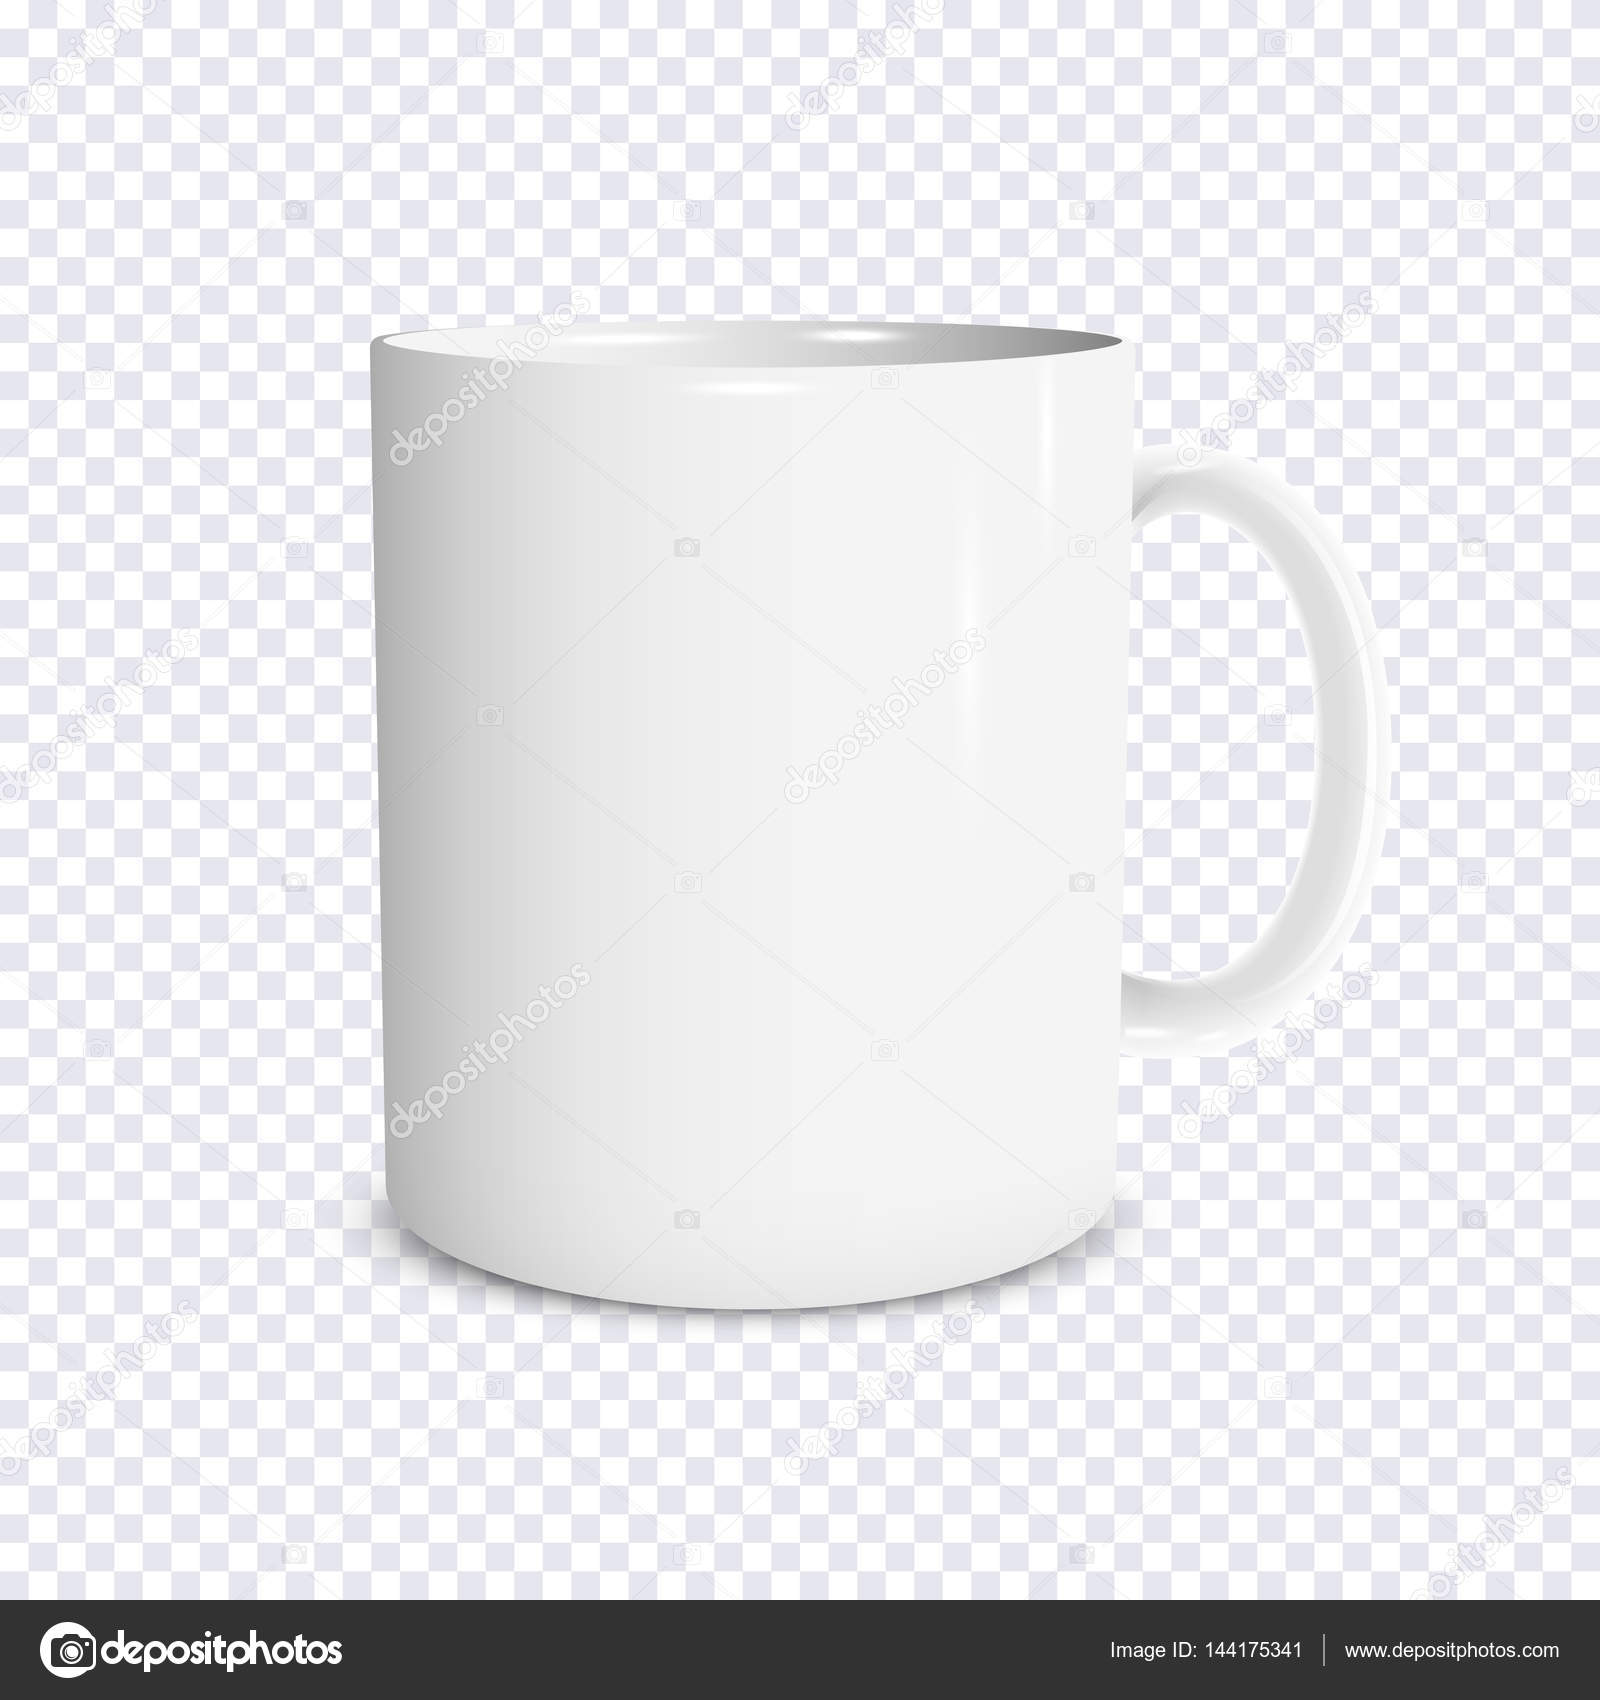 Realistic white coffee mug isolated on transparent background